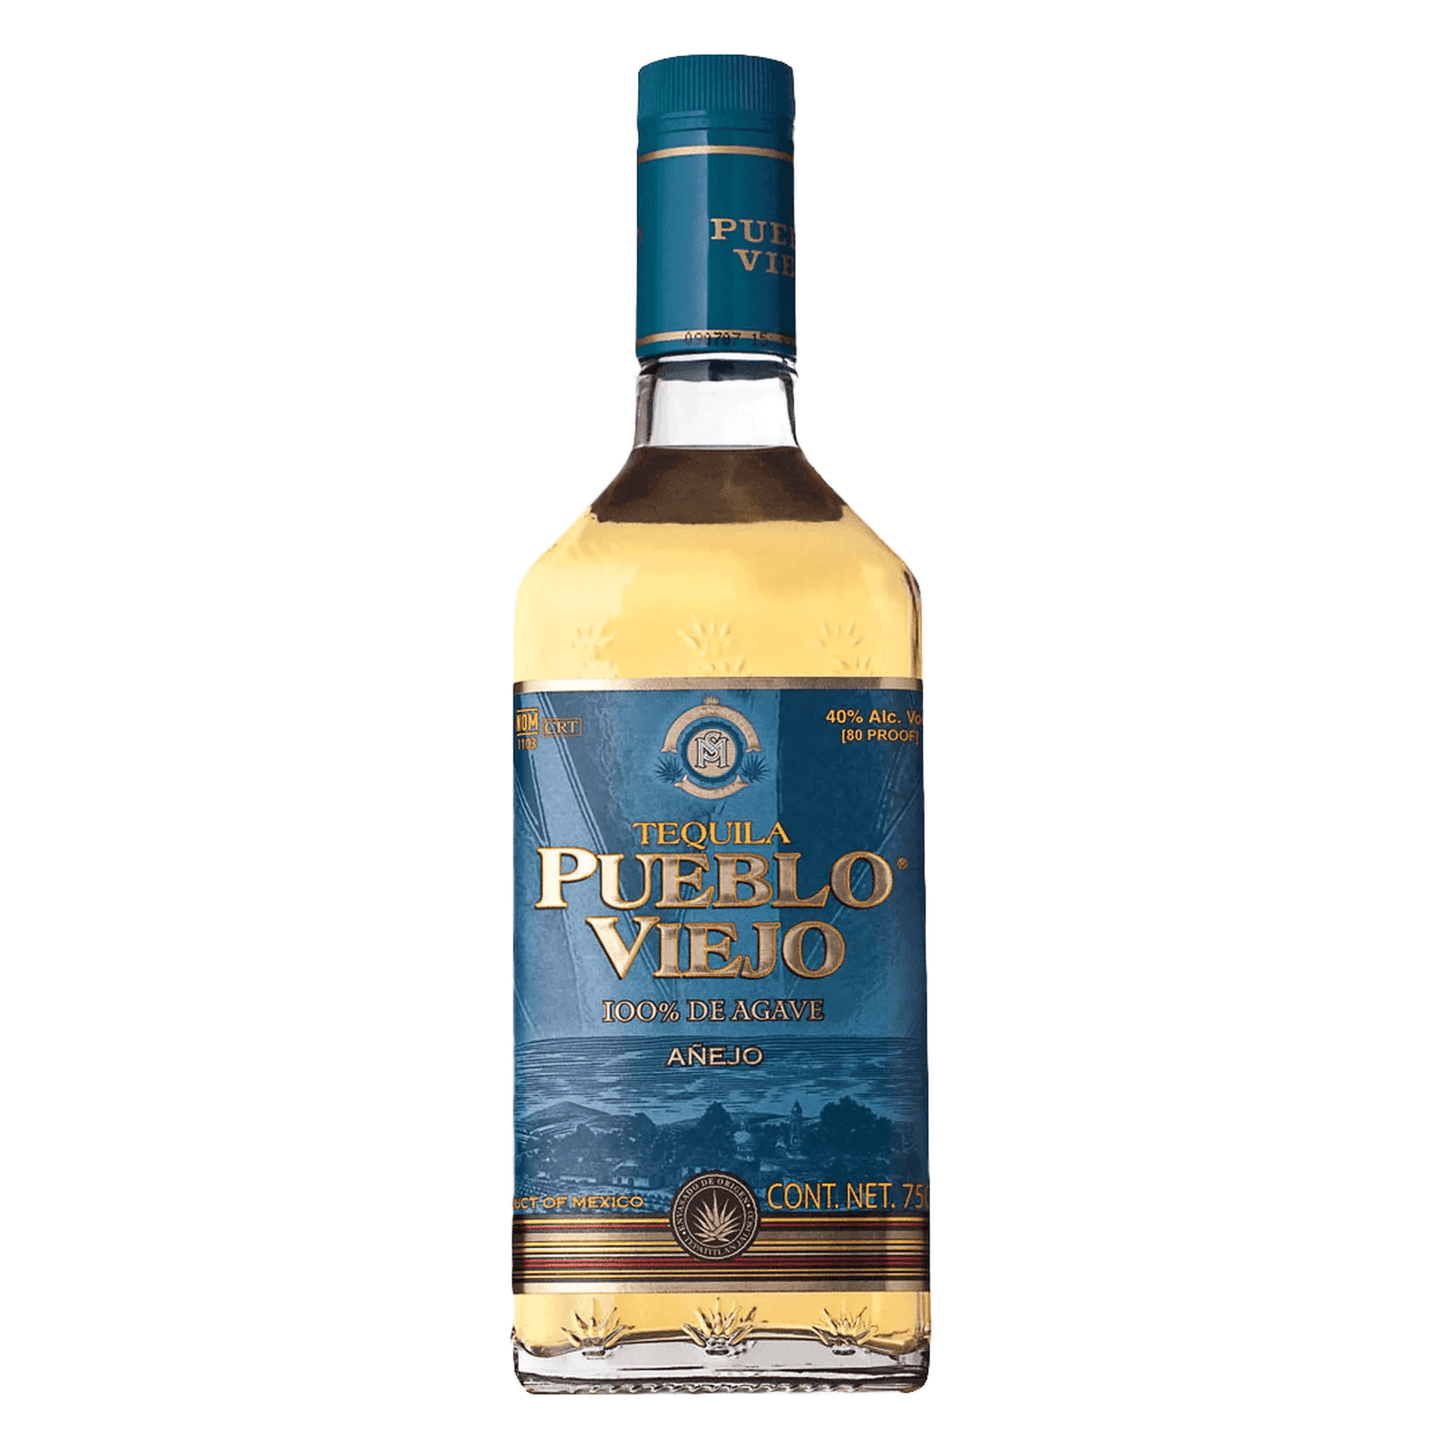 Pueblo Viejo Anejo Tequila - Liquor Geeks